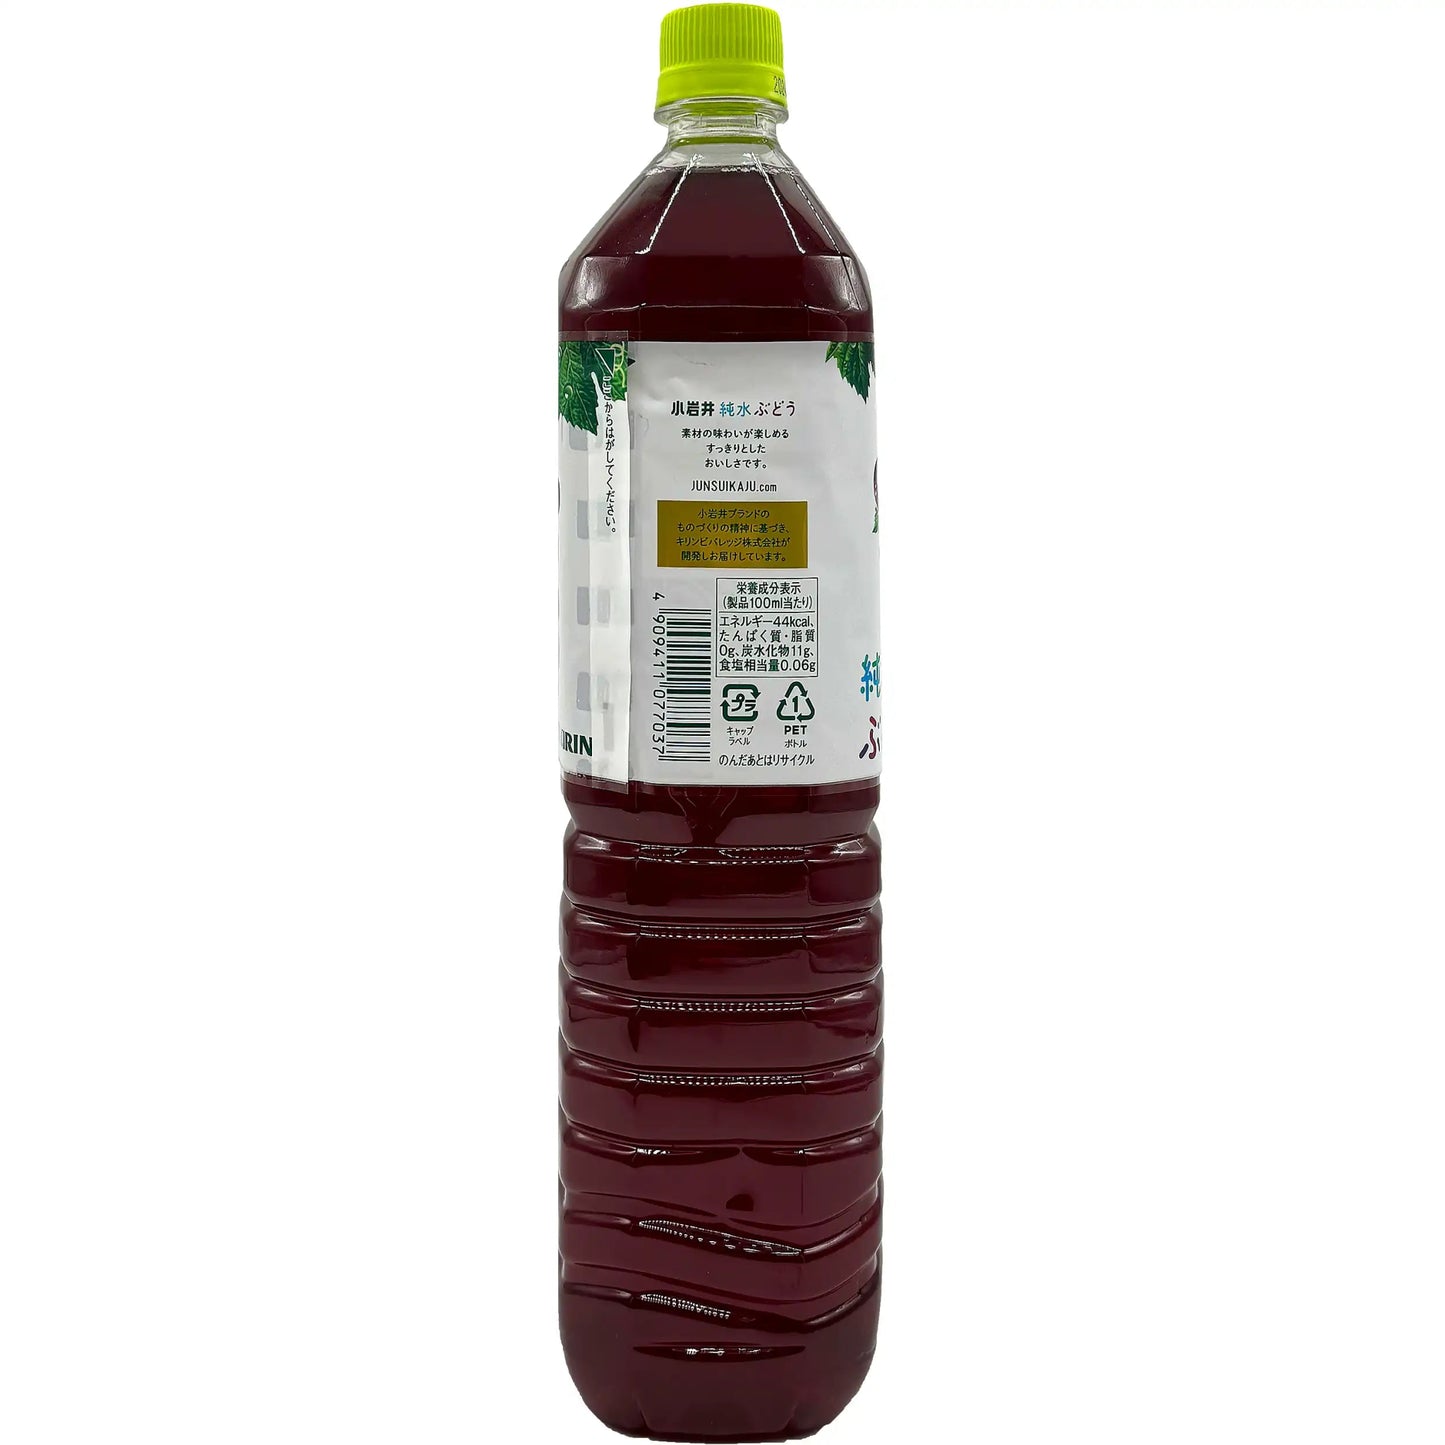 Kirin Koiwai Grape Drink 1.5 L